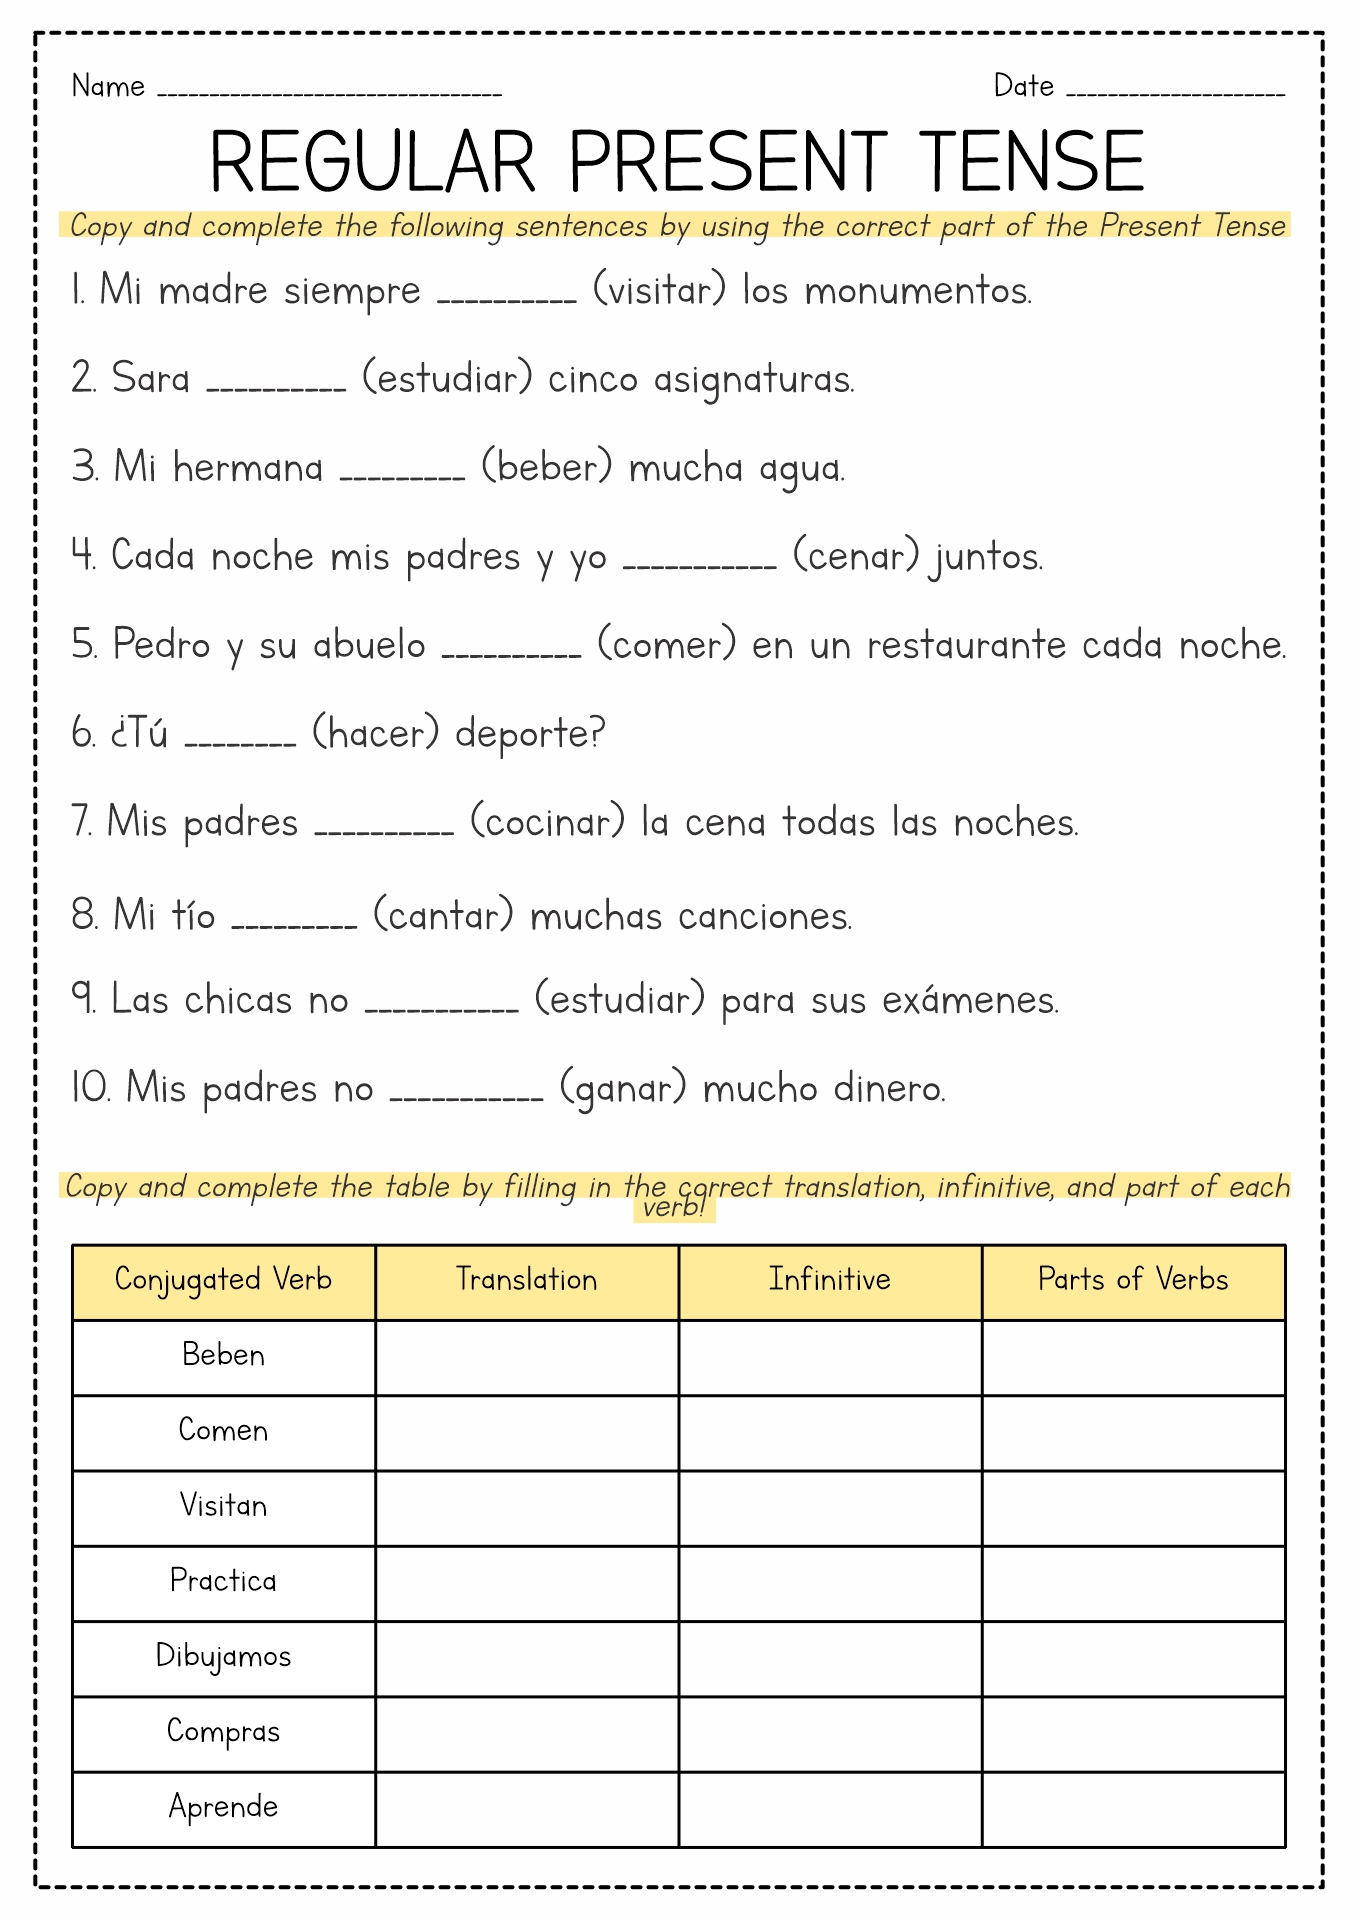 Spanish Present Tense Verb Worksheet Printable Image